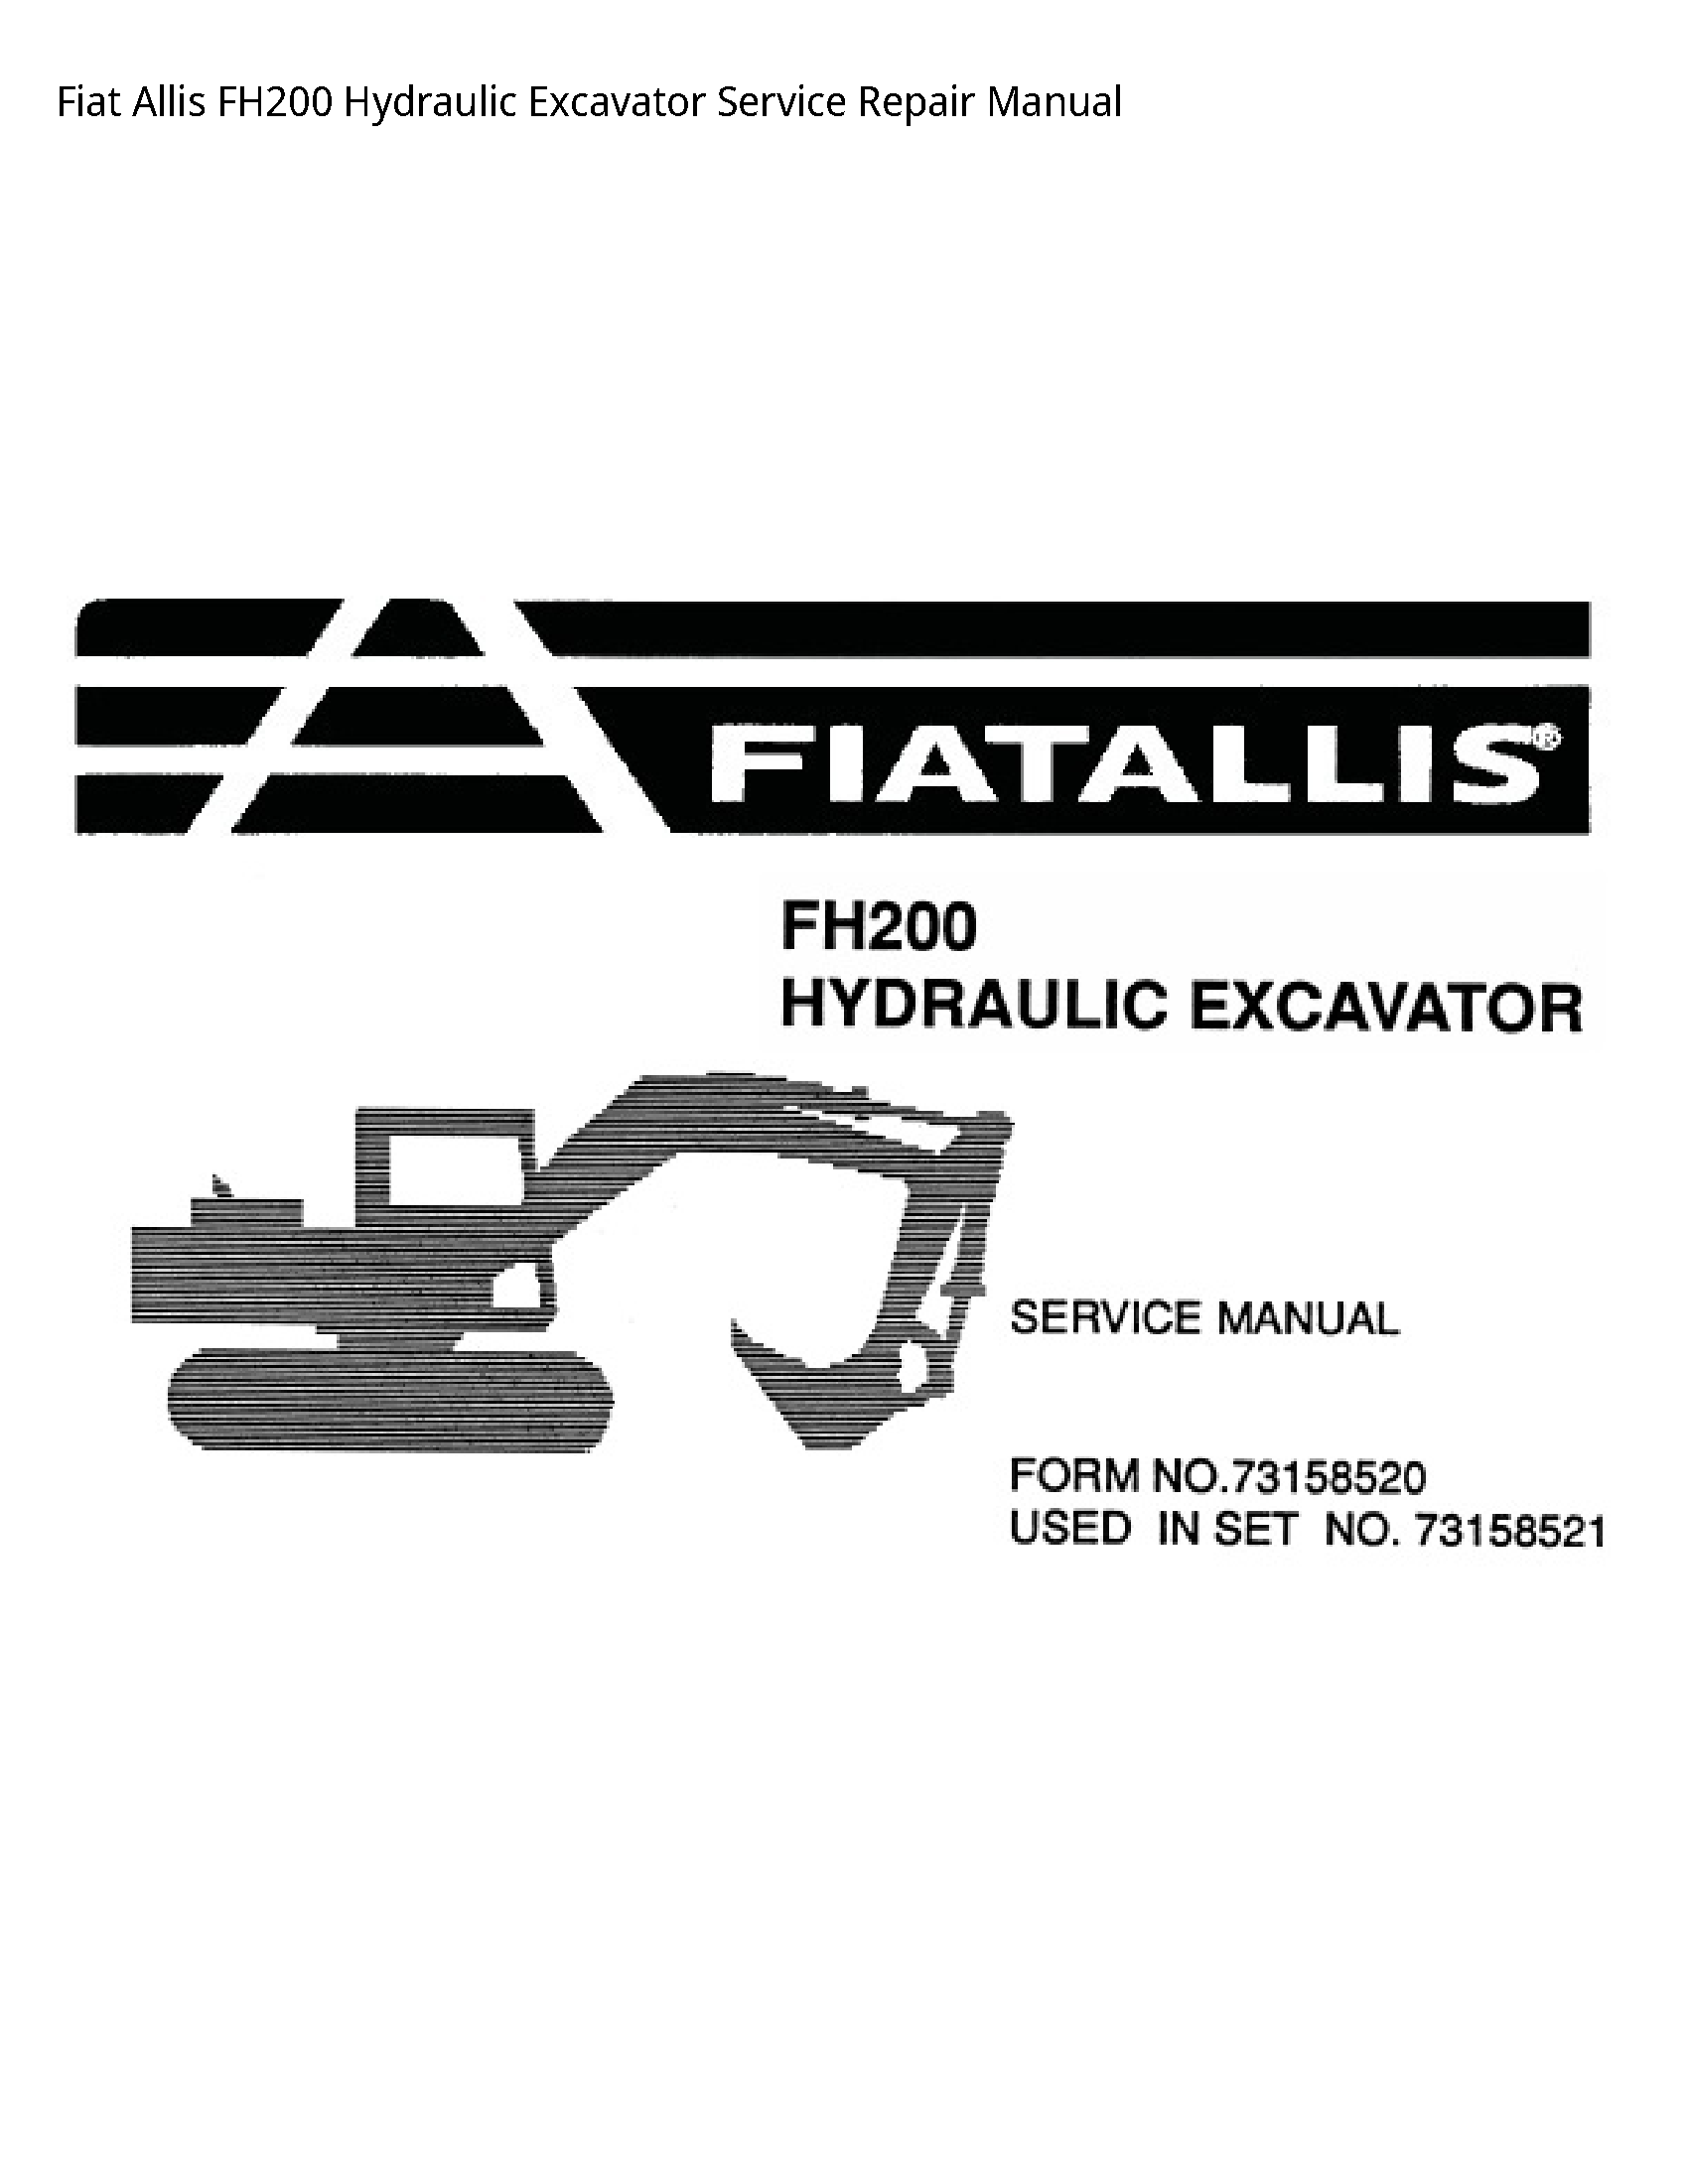 Fiat Allis FH200 Hydraulic Excavator manual